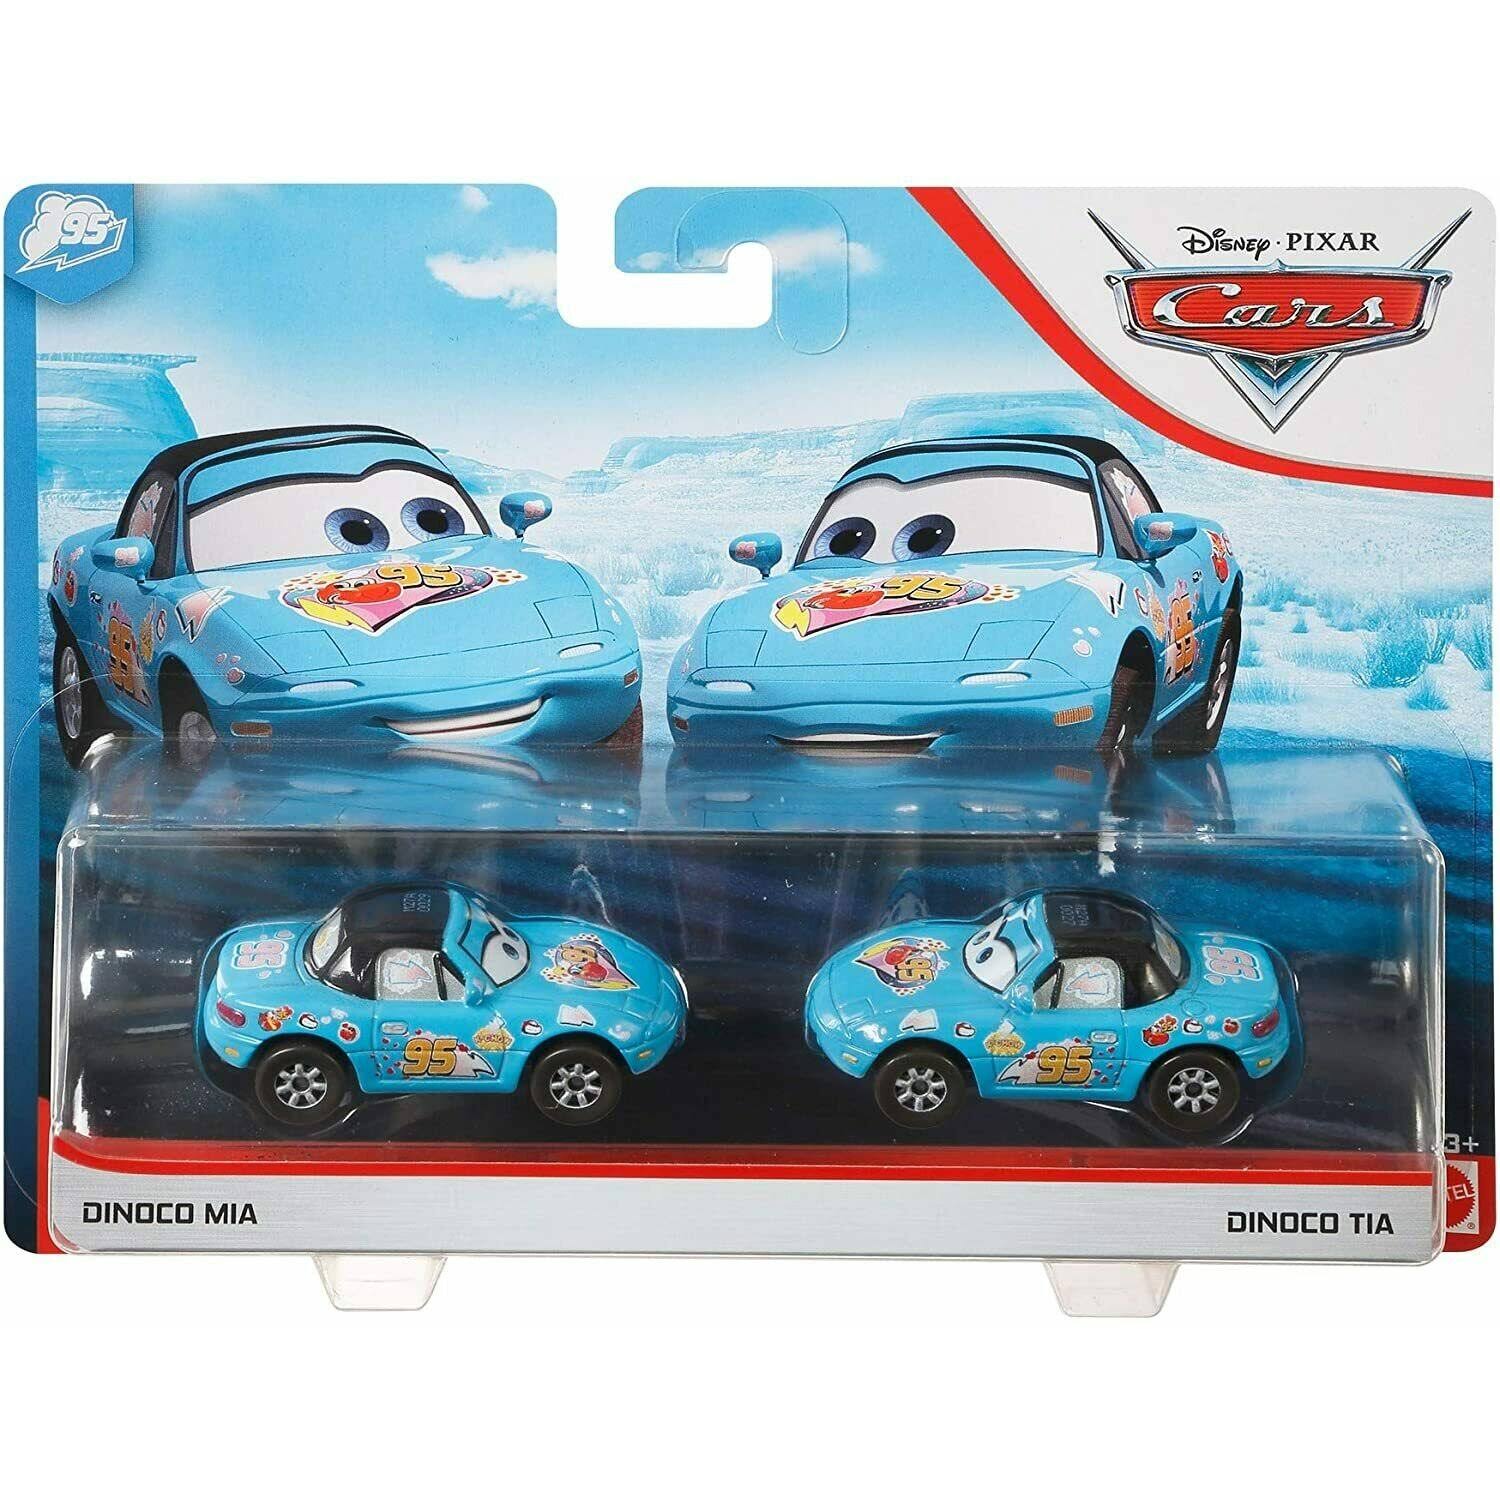 Disney Pixar Cars Character Car Vehicle 2 Pack Dinoco Mia and Tia